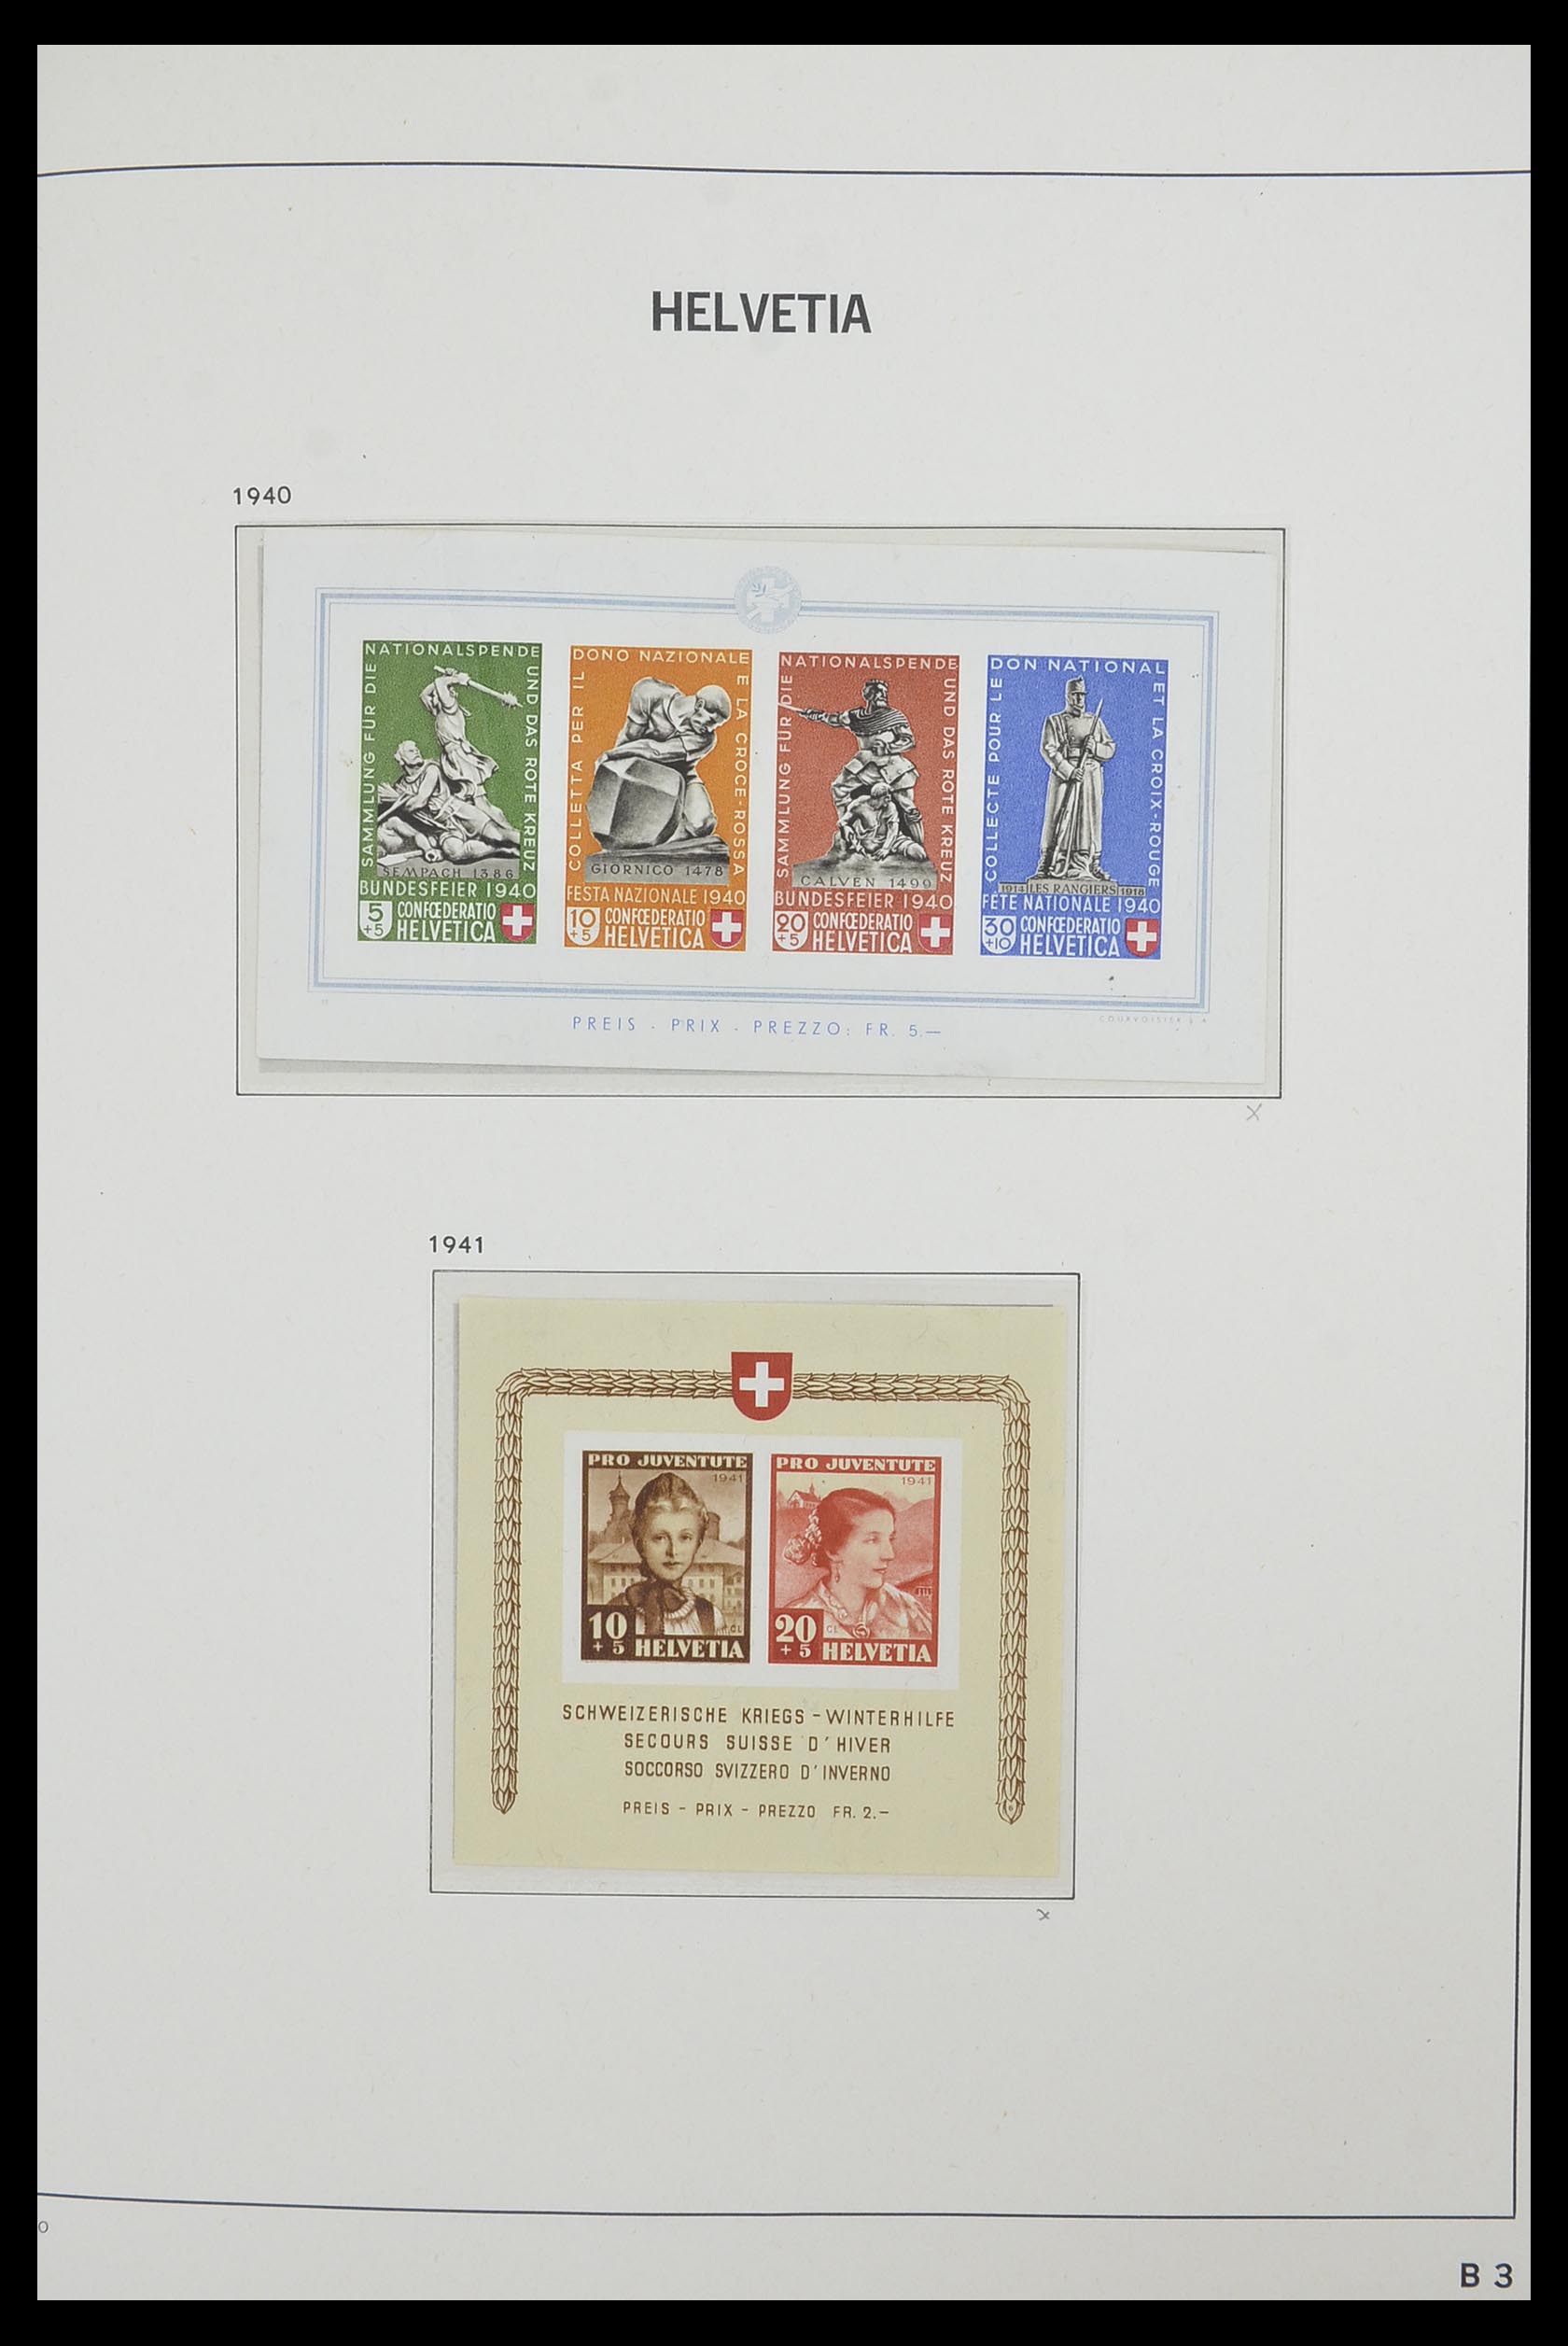 33556 138 - Stamp collection 33556 Switzerland 1862-2000.